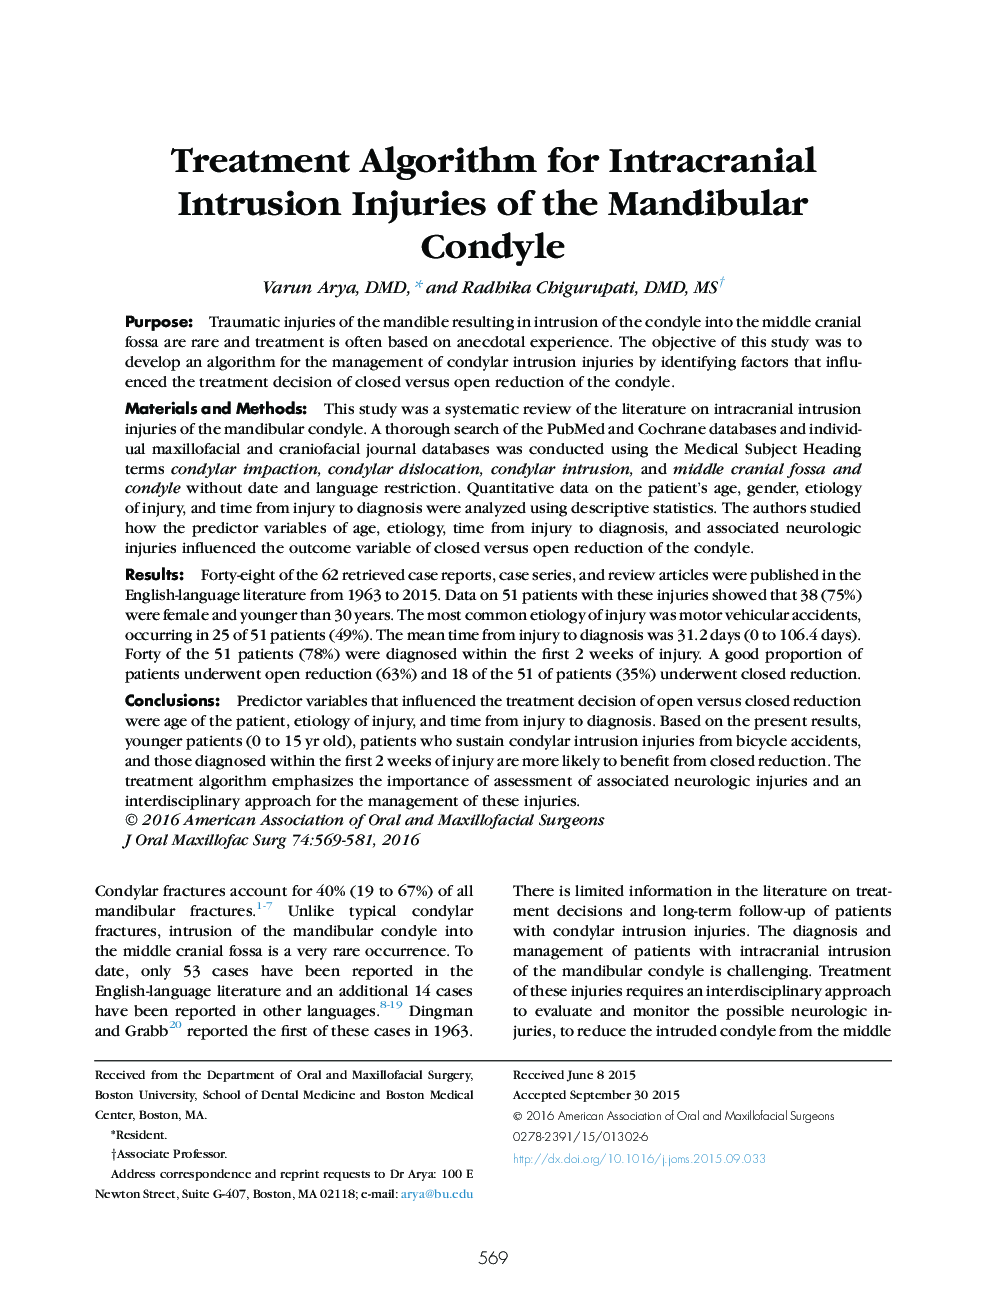 Treatment Algorithm for Intracranial Intrusion Injuries of the Mandibular Condyle